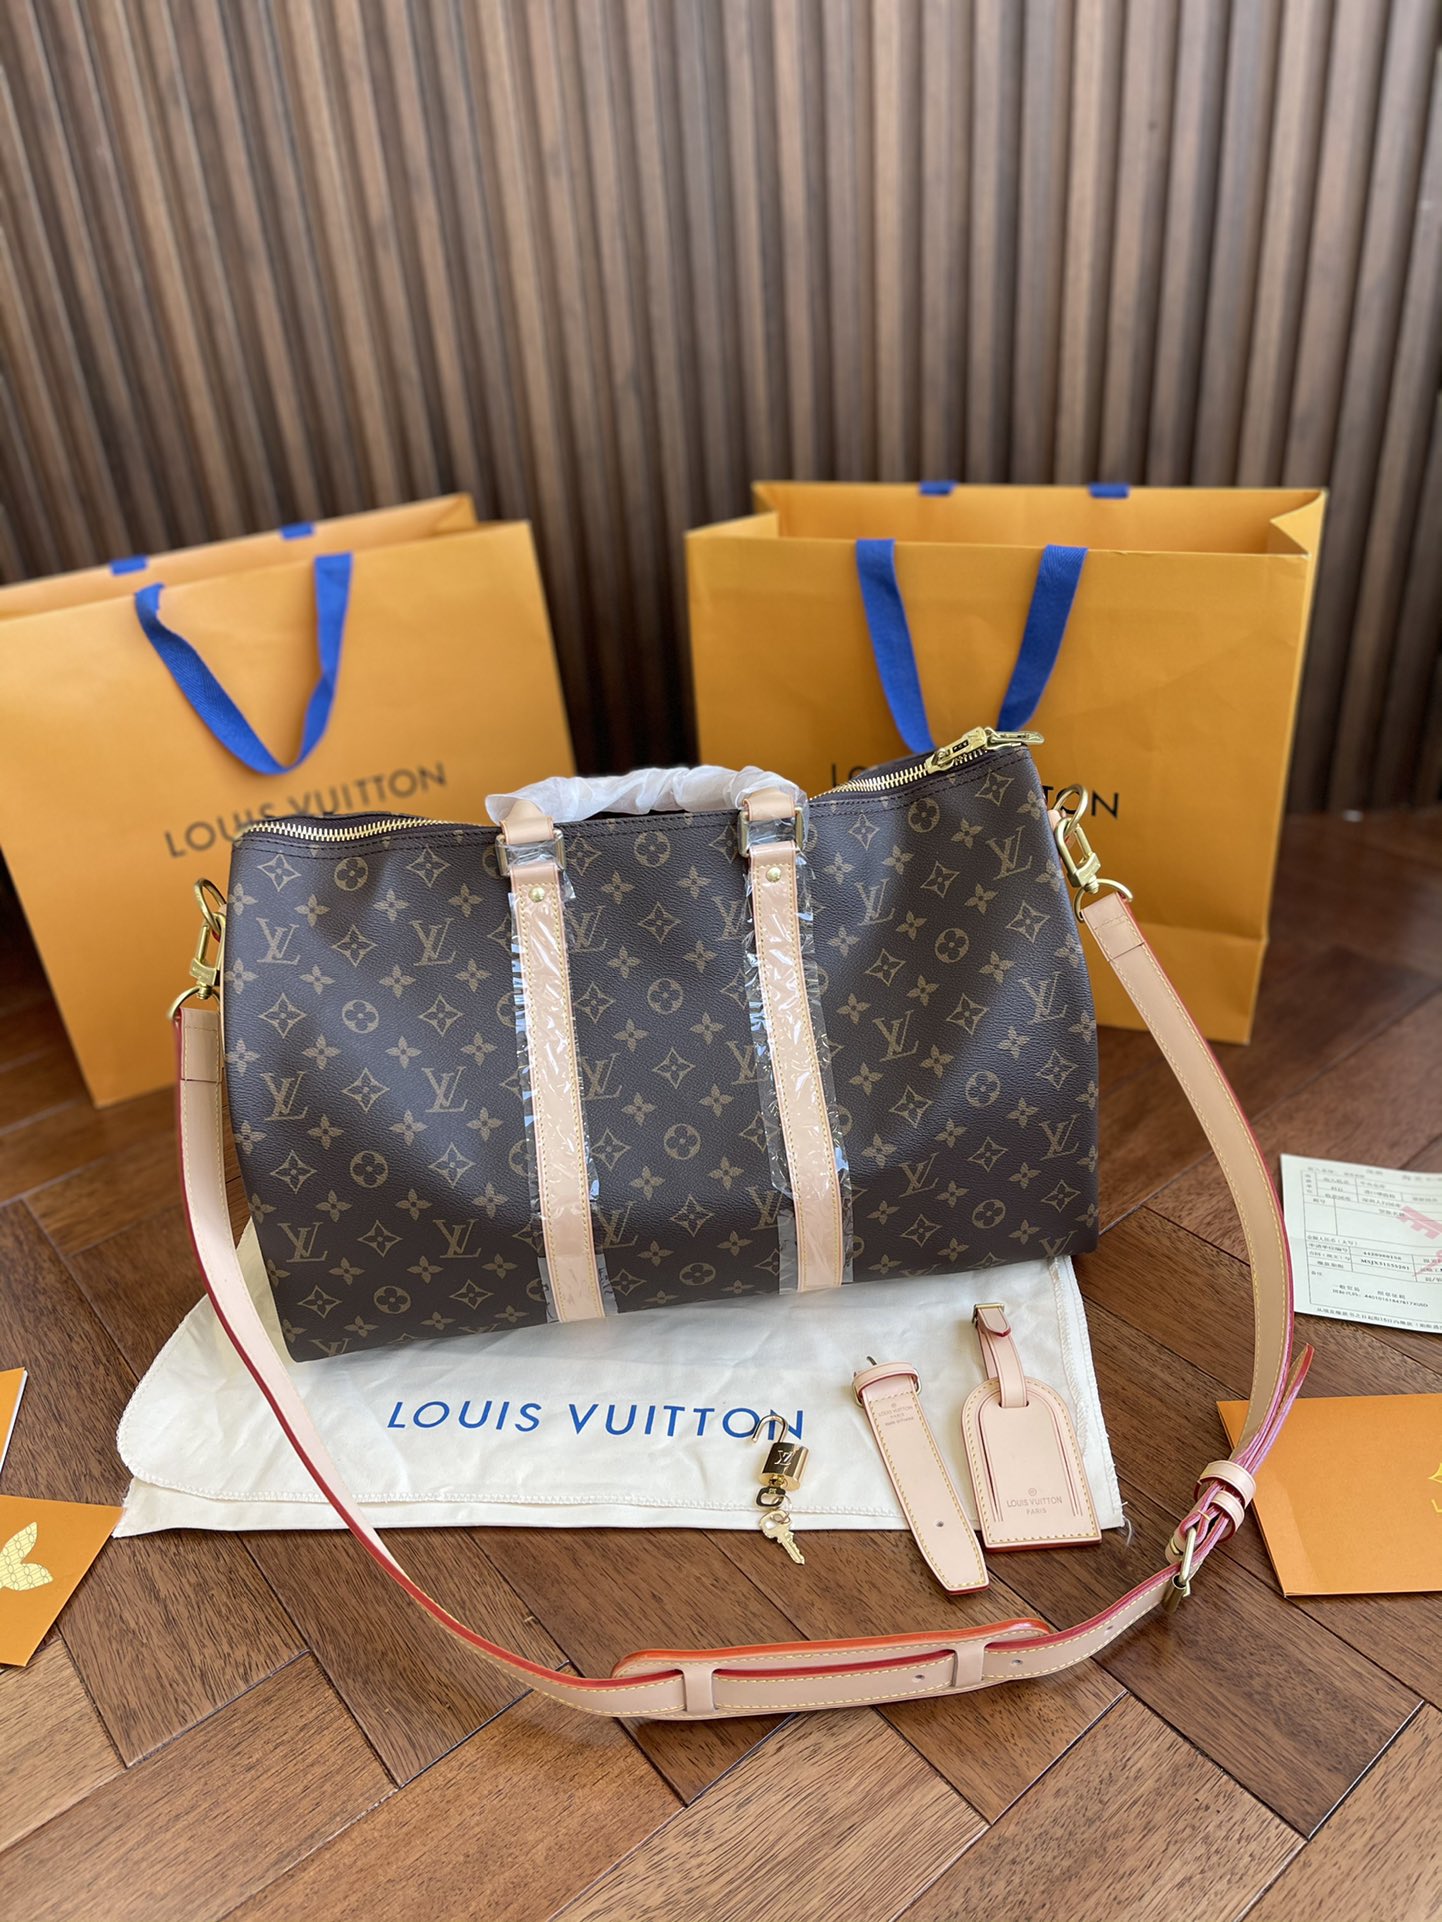 LV Louis Vuitton Keepall Travel Bags